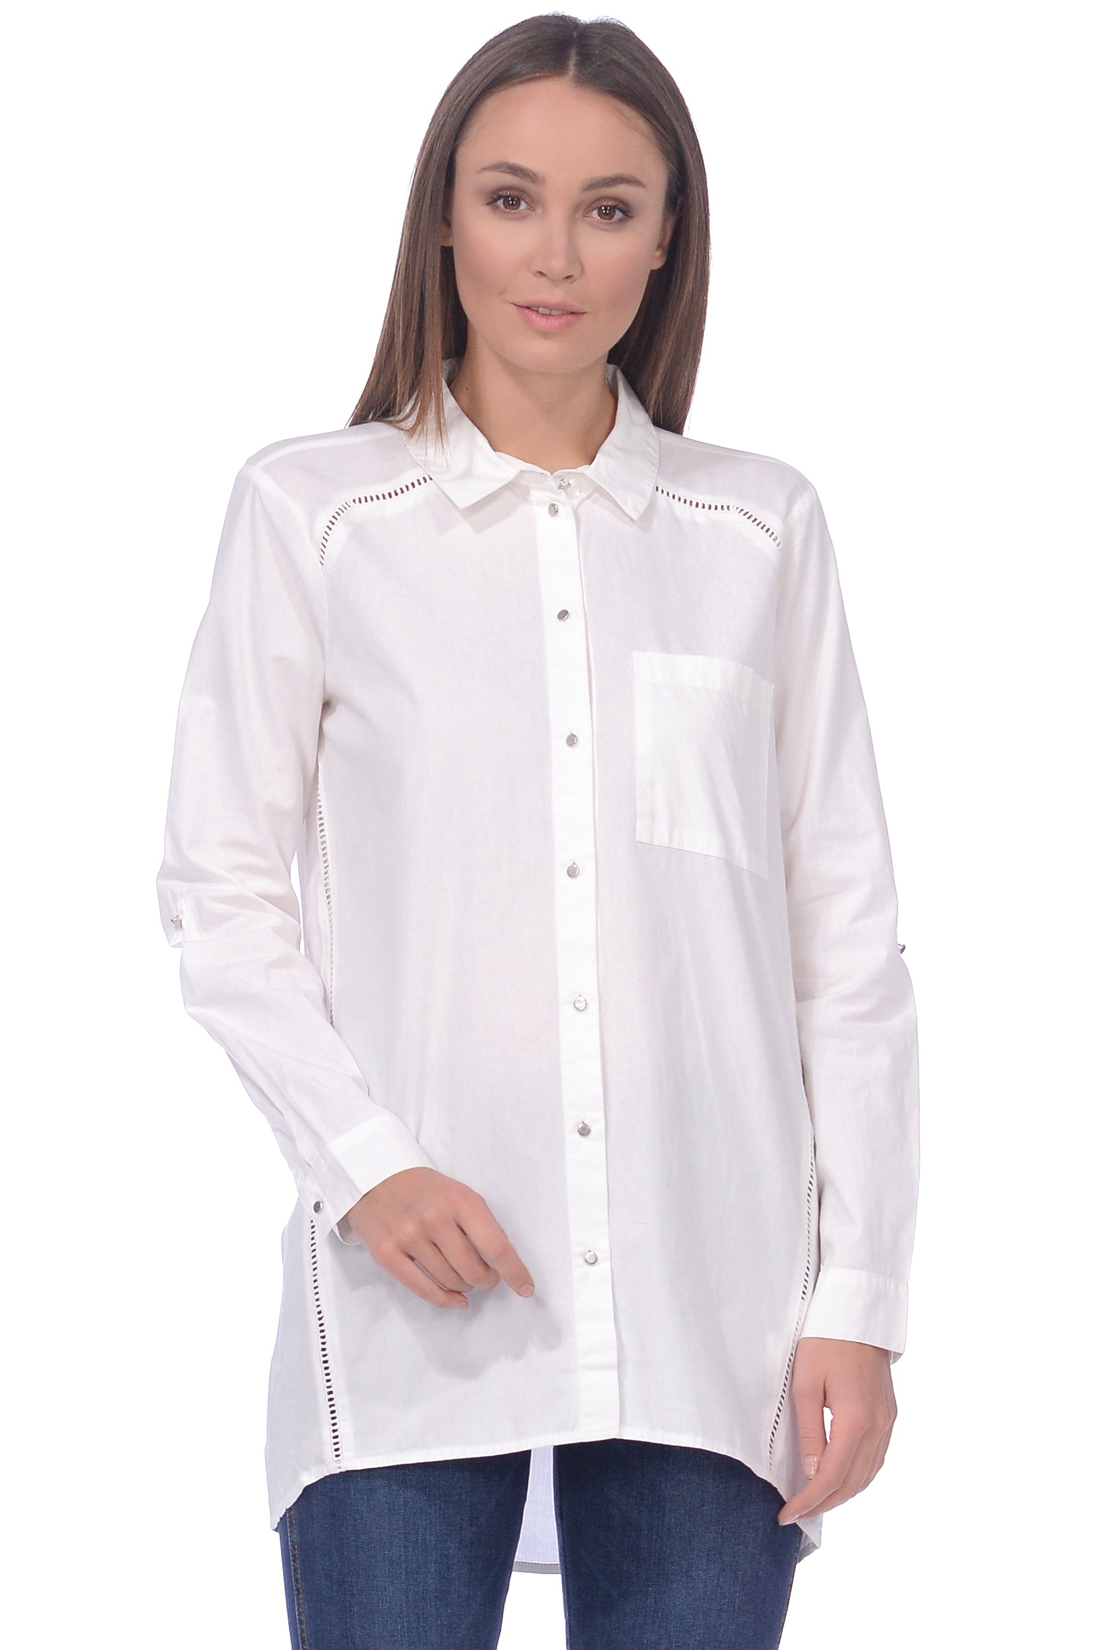 Блузка с ажурными прошвами (арт. baon B179024), размер 3XL, цвет белый Блузка с ажурными прошвами (арт. baon B179024) - фото 1